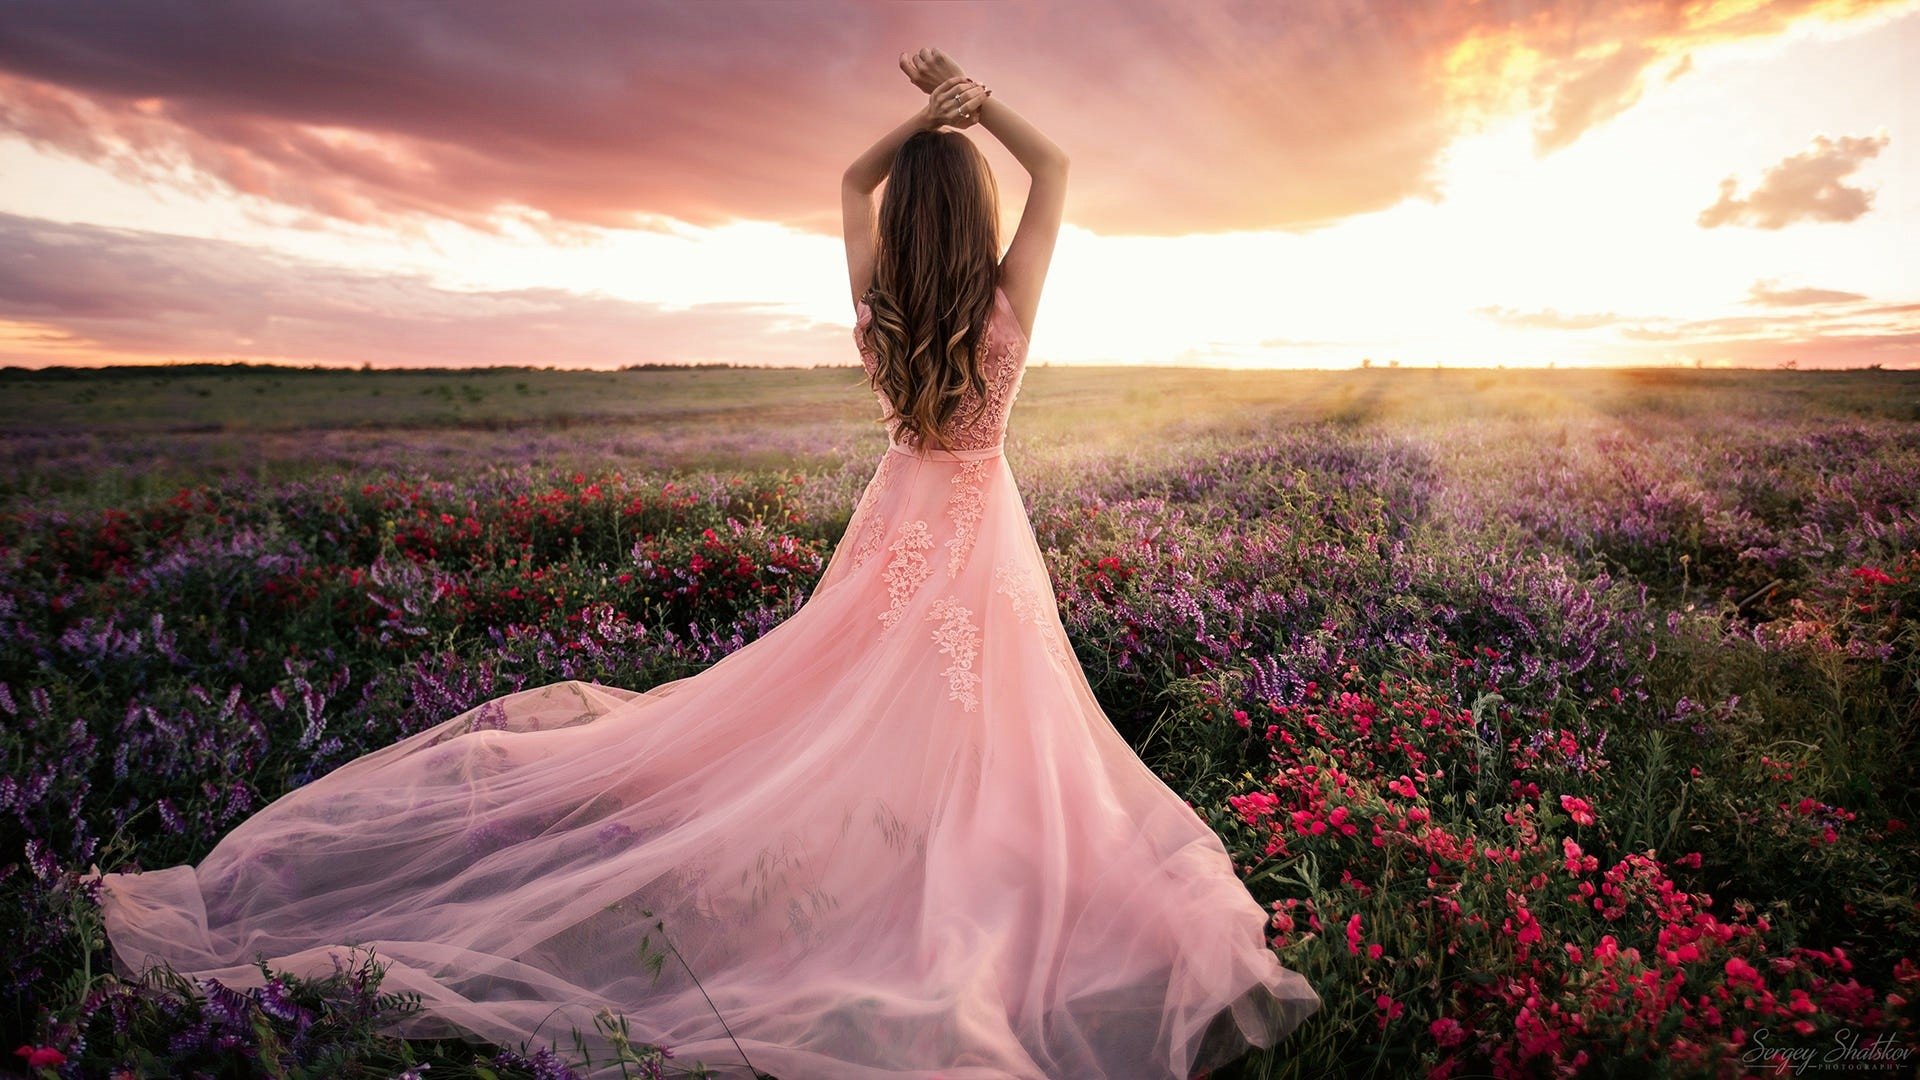 Girl In Flower Field At Sunset